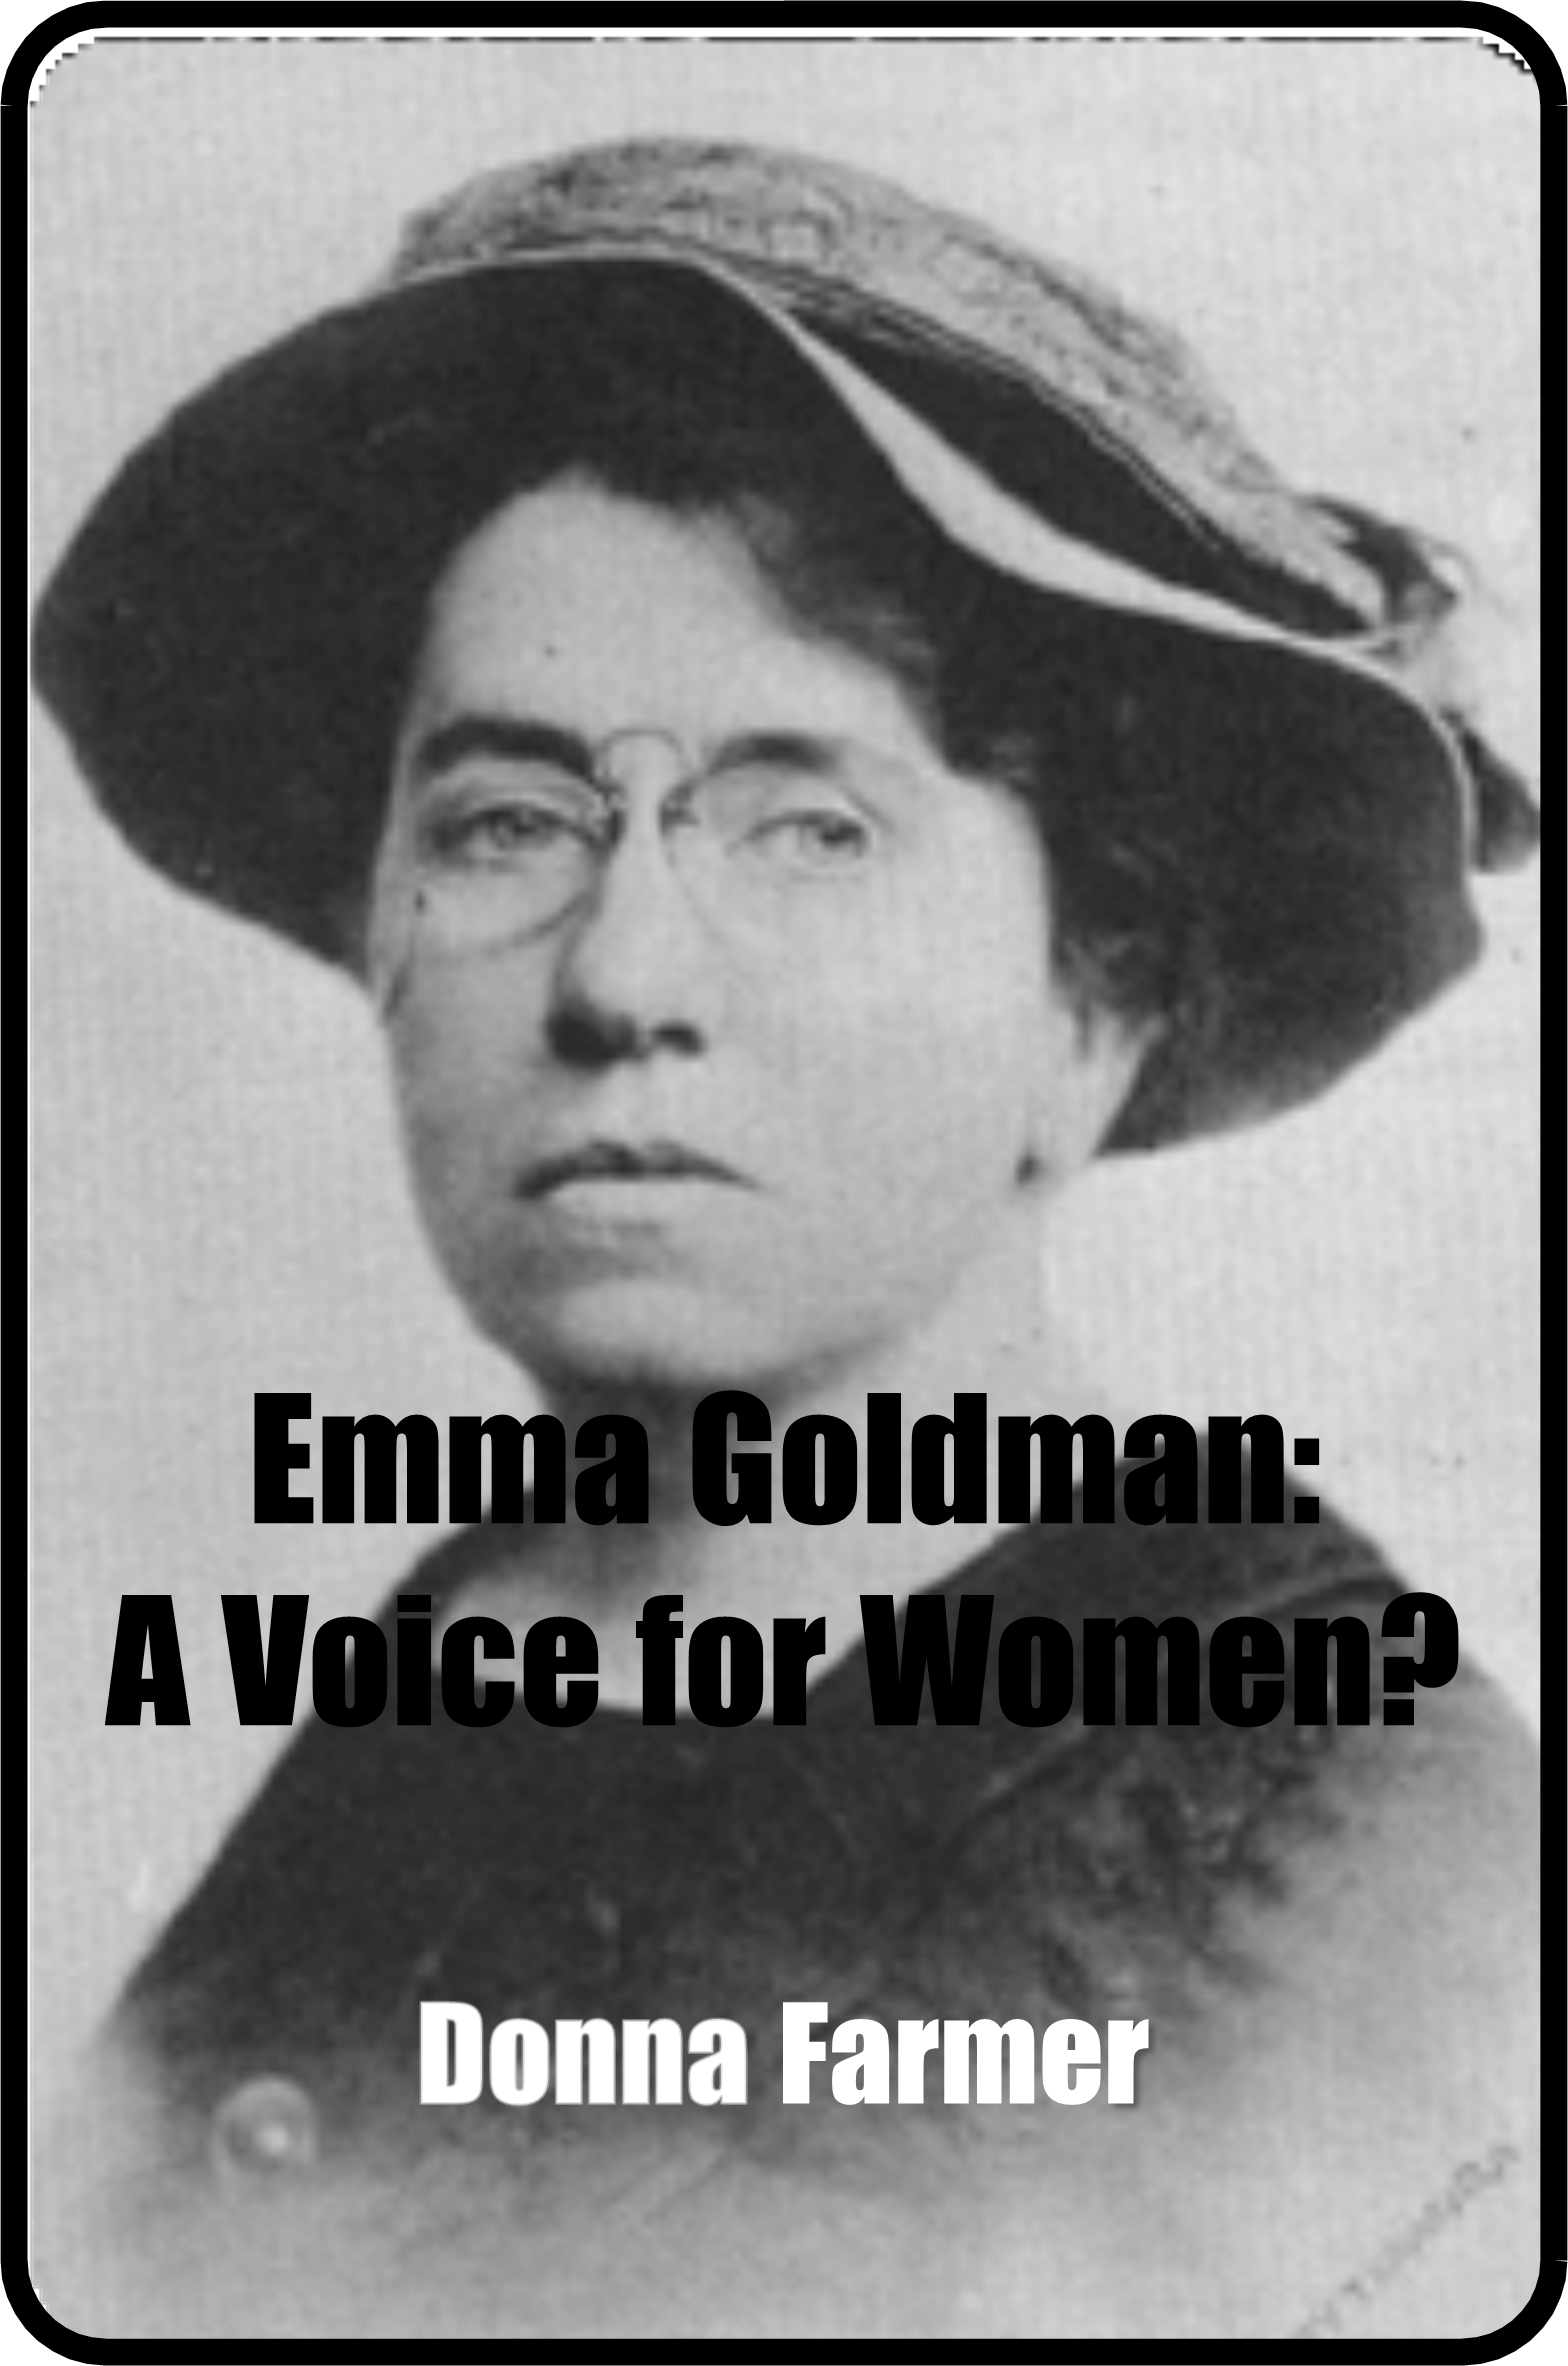 d-f-donna-farmer-emma-goldman-a-voice-for-women-1.png